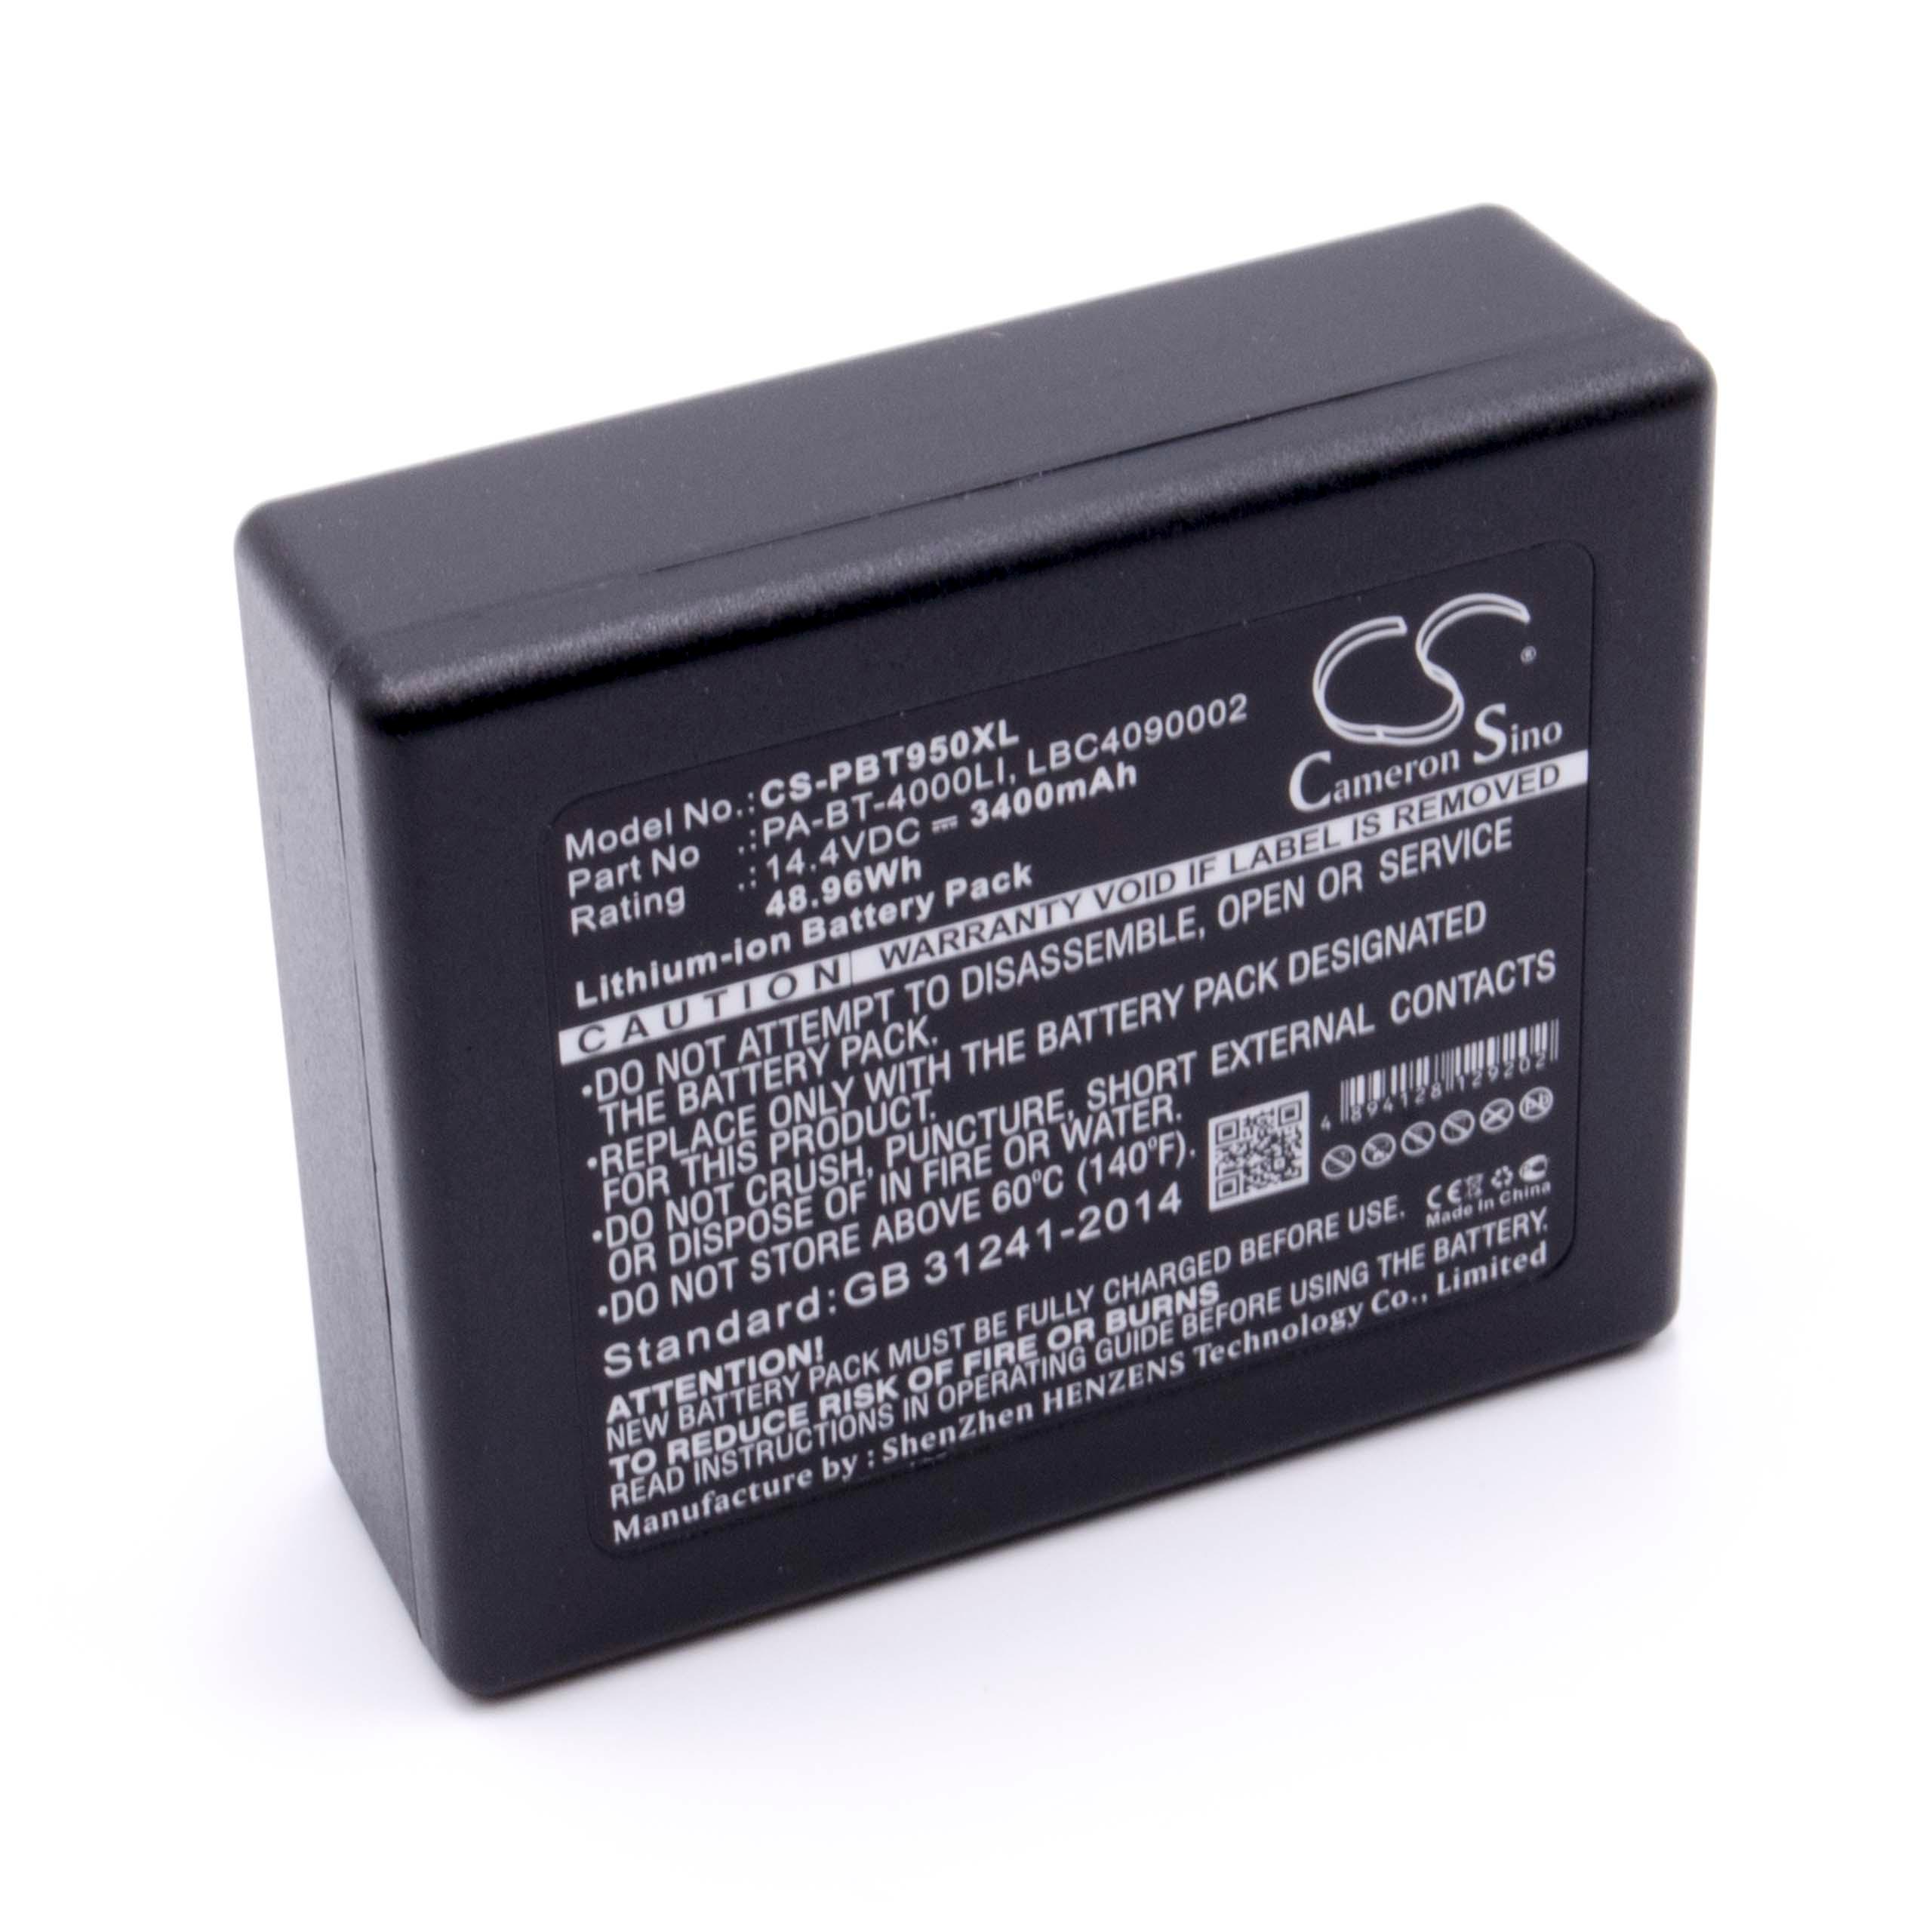 Printer Battery Replacement for Brother LBD709-001, HP25B, LBF3250001, LBC4090002 - 3400mAh 14.4V Li-Ion